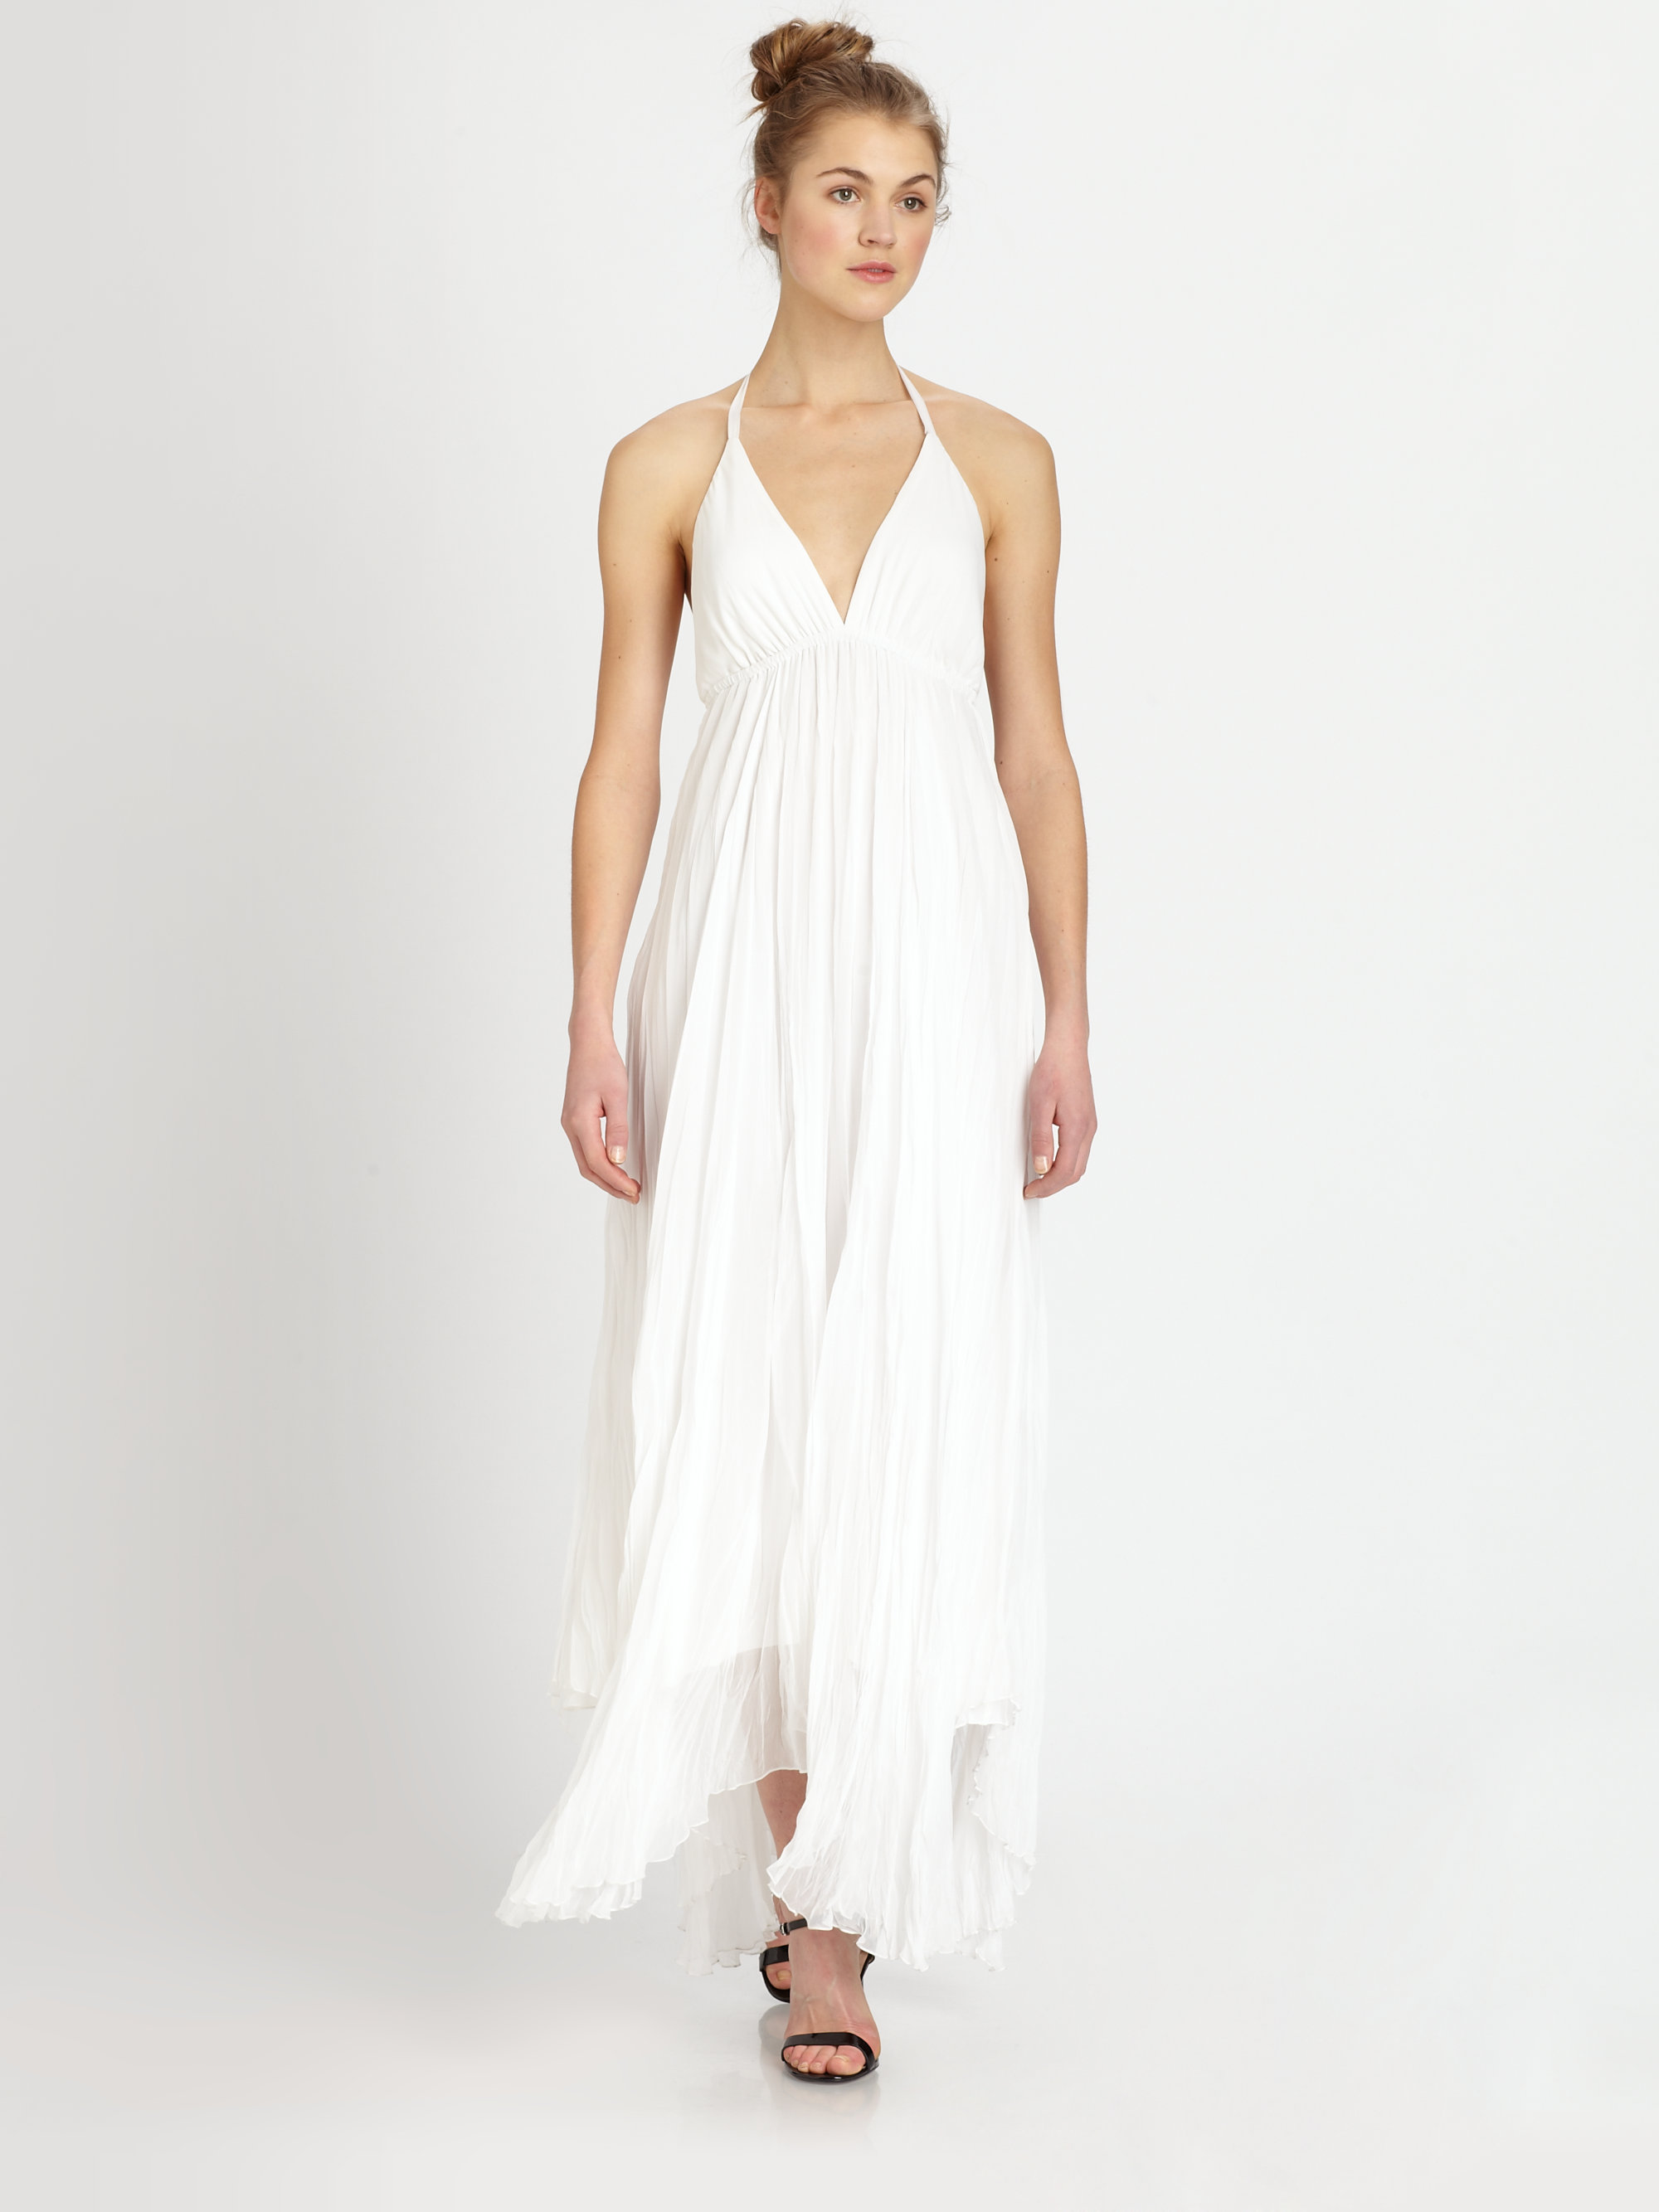 Alice + olivia Bade Silk Halter Dress in White | Lyst